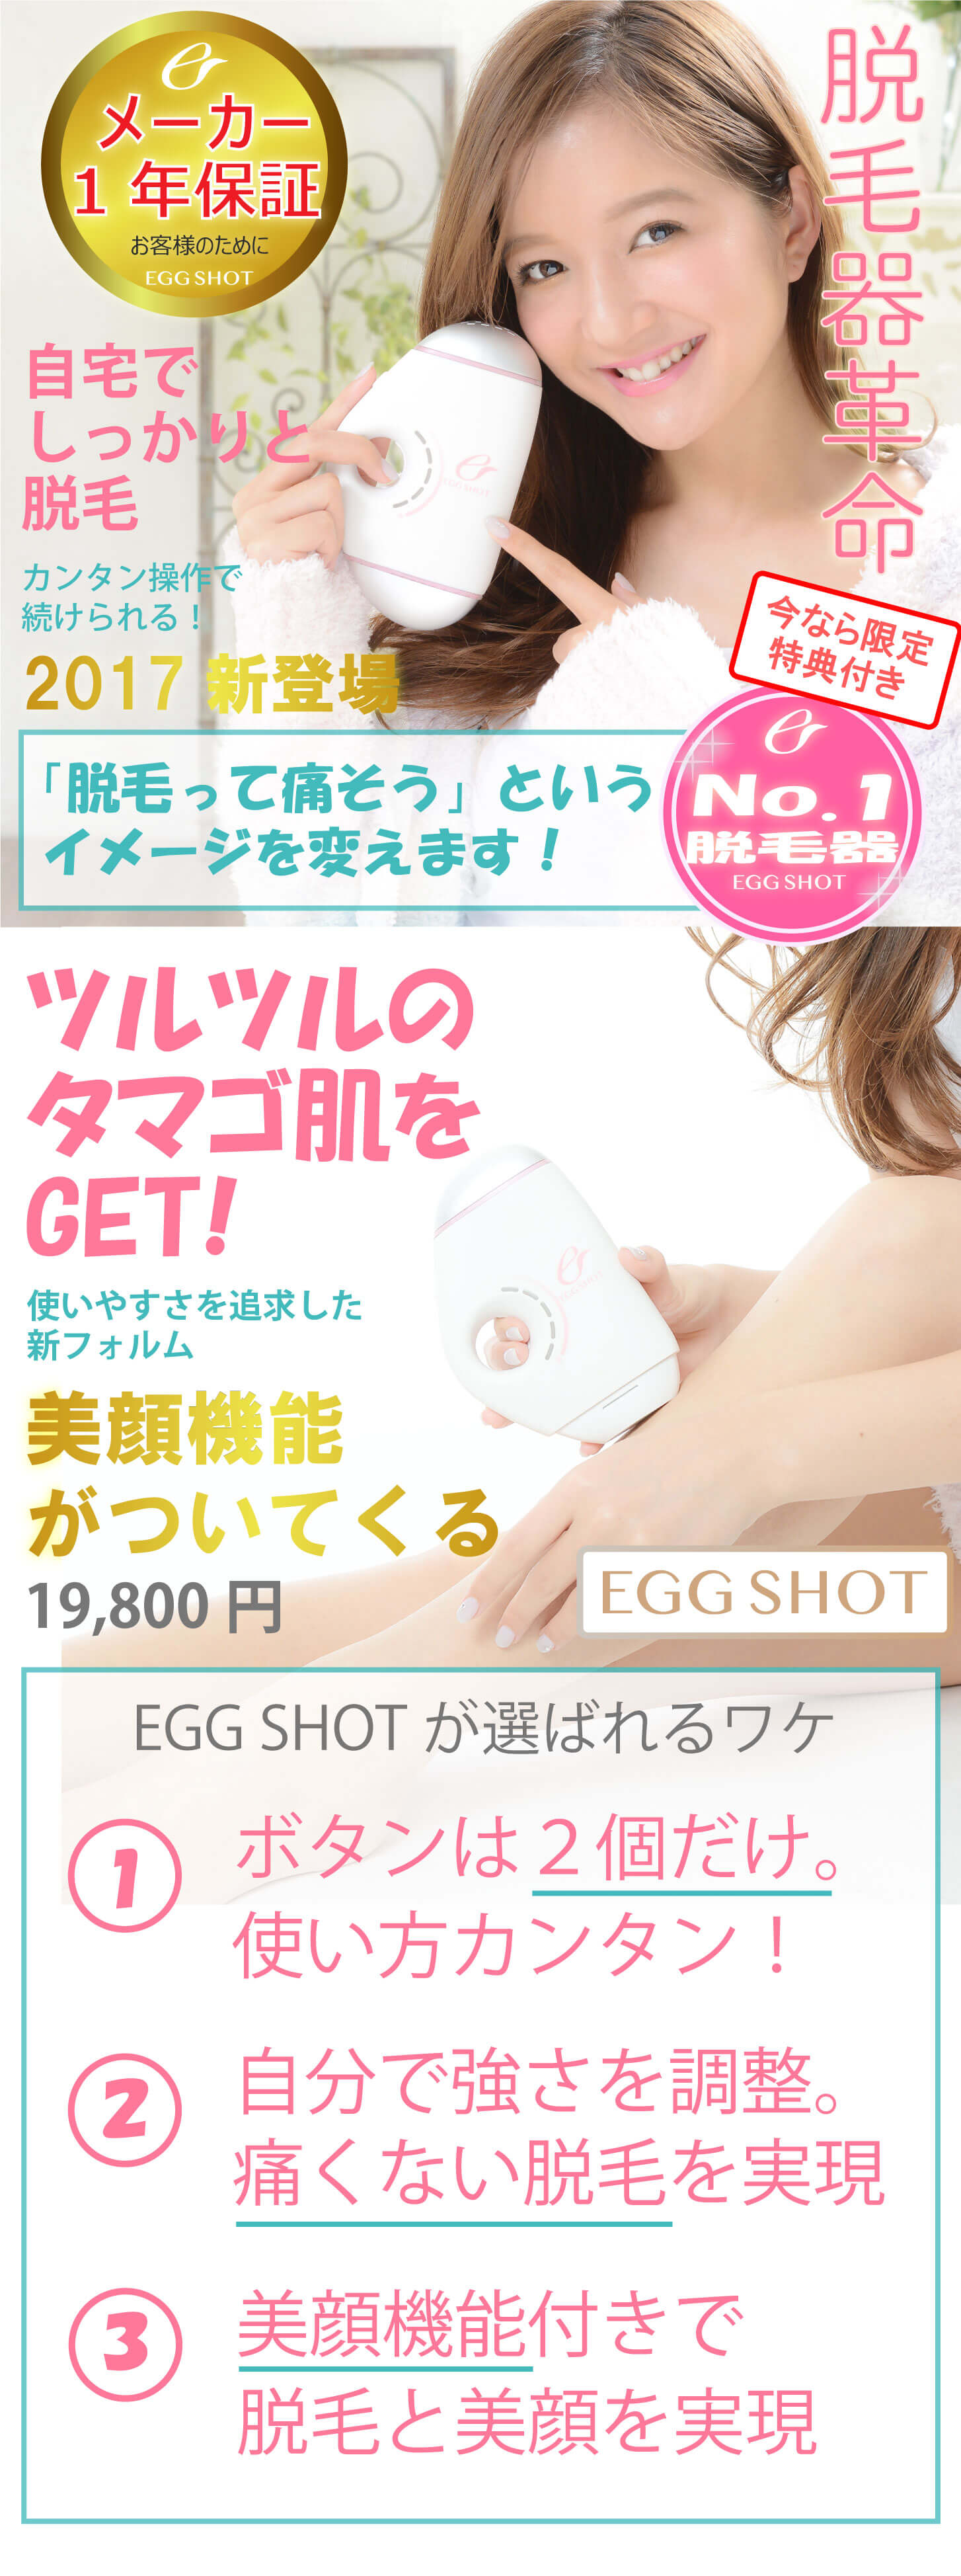 EGG SHOT | KINUJO INTERNATIONAL